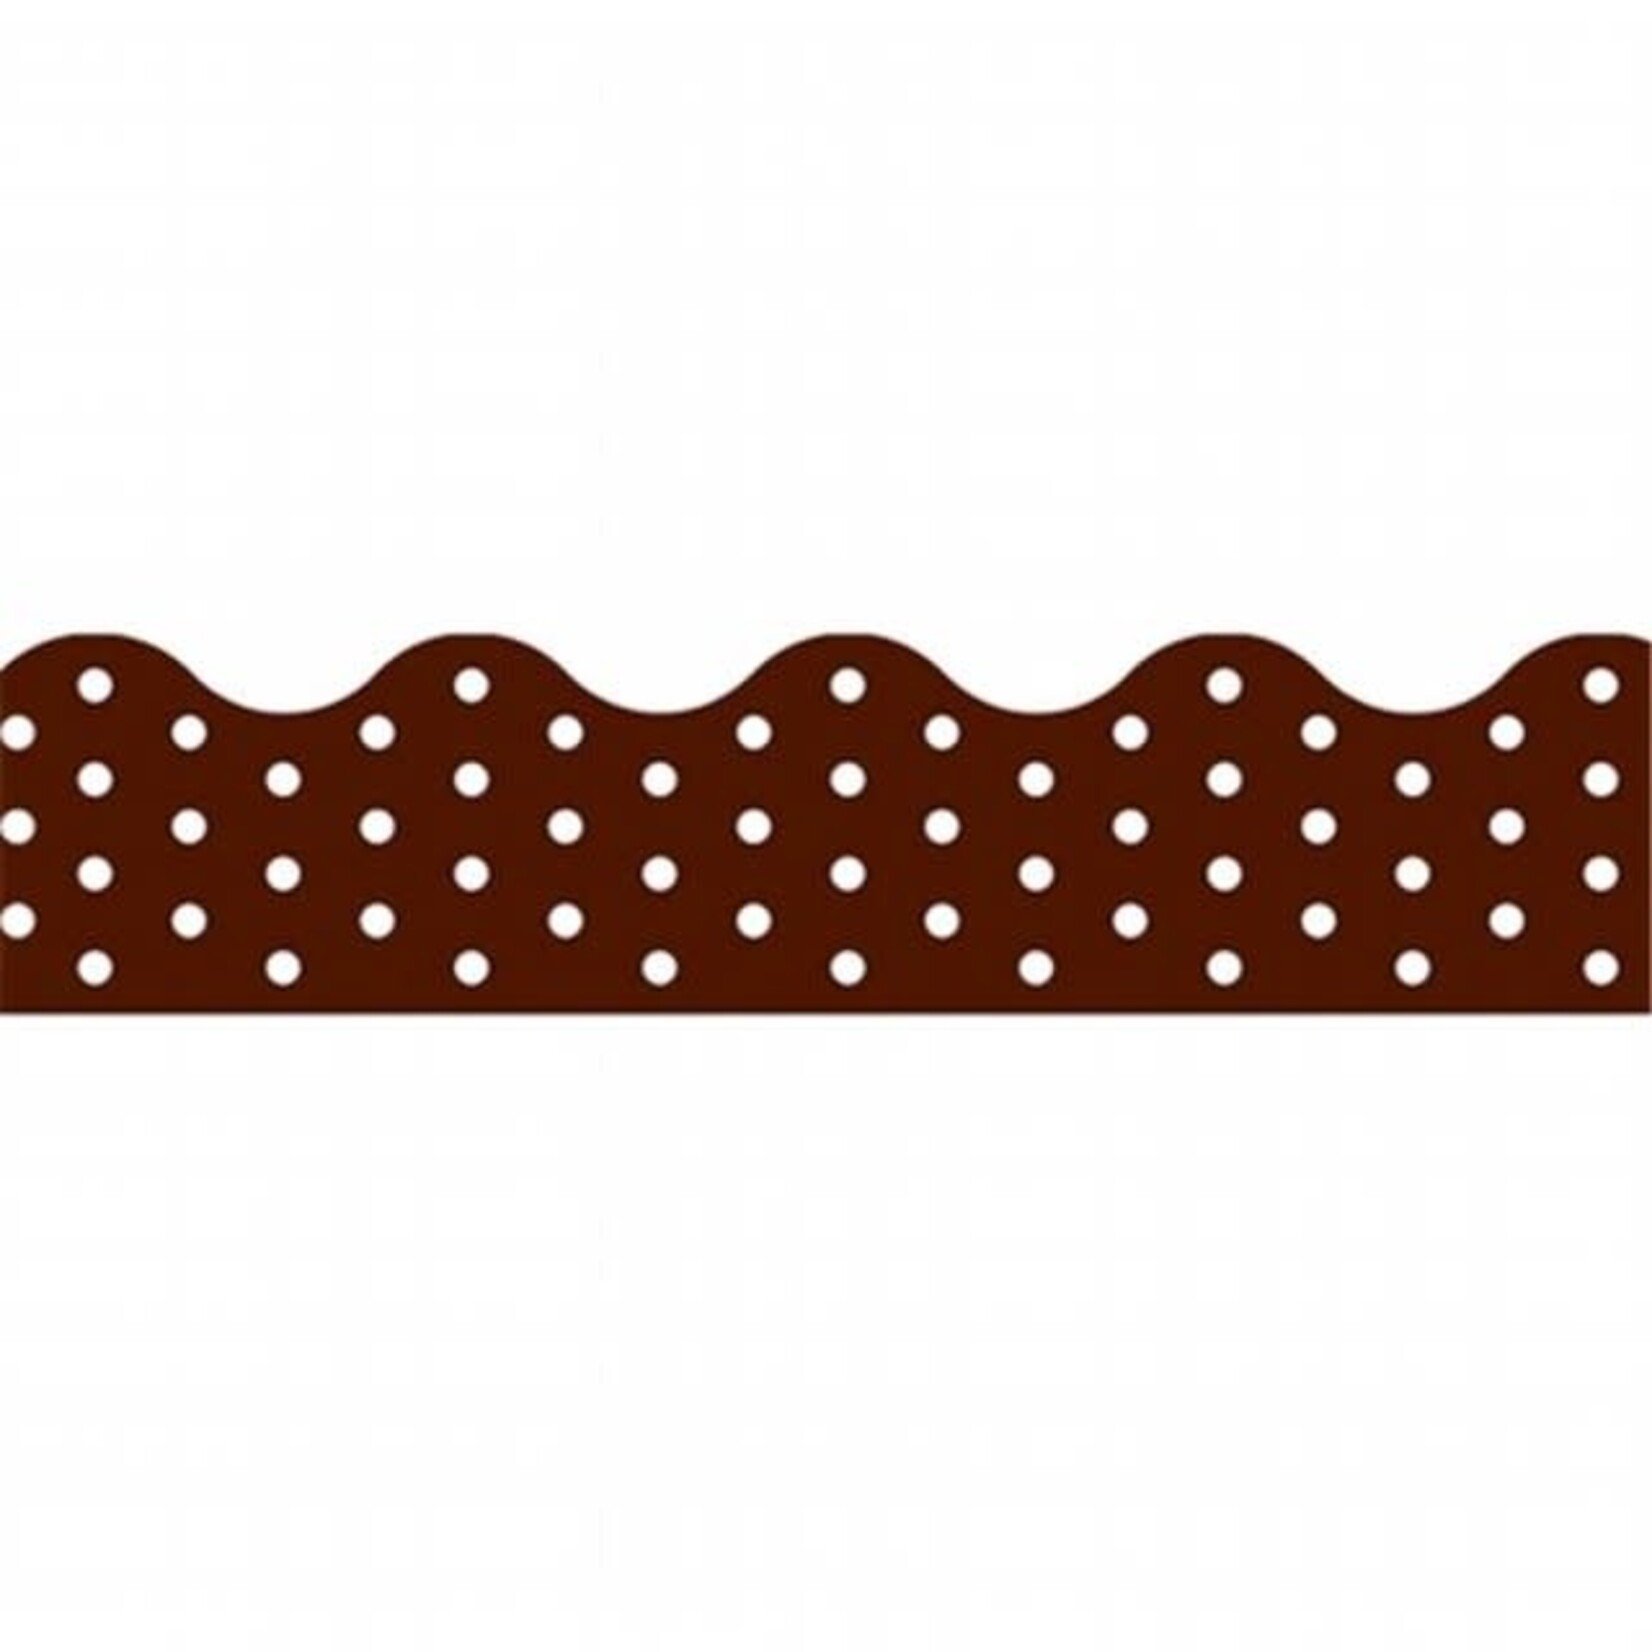 TREND ENTERPRISES INC Polka Dots Chocolate Terrific Trim